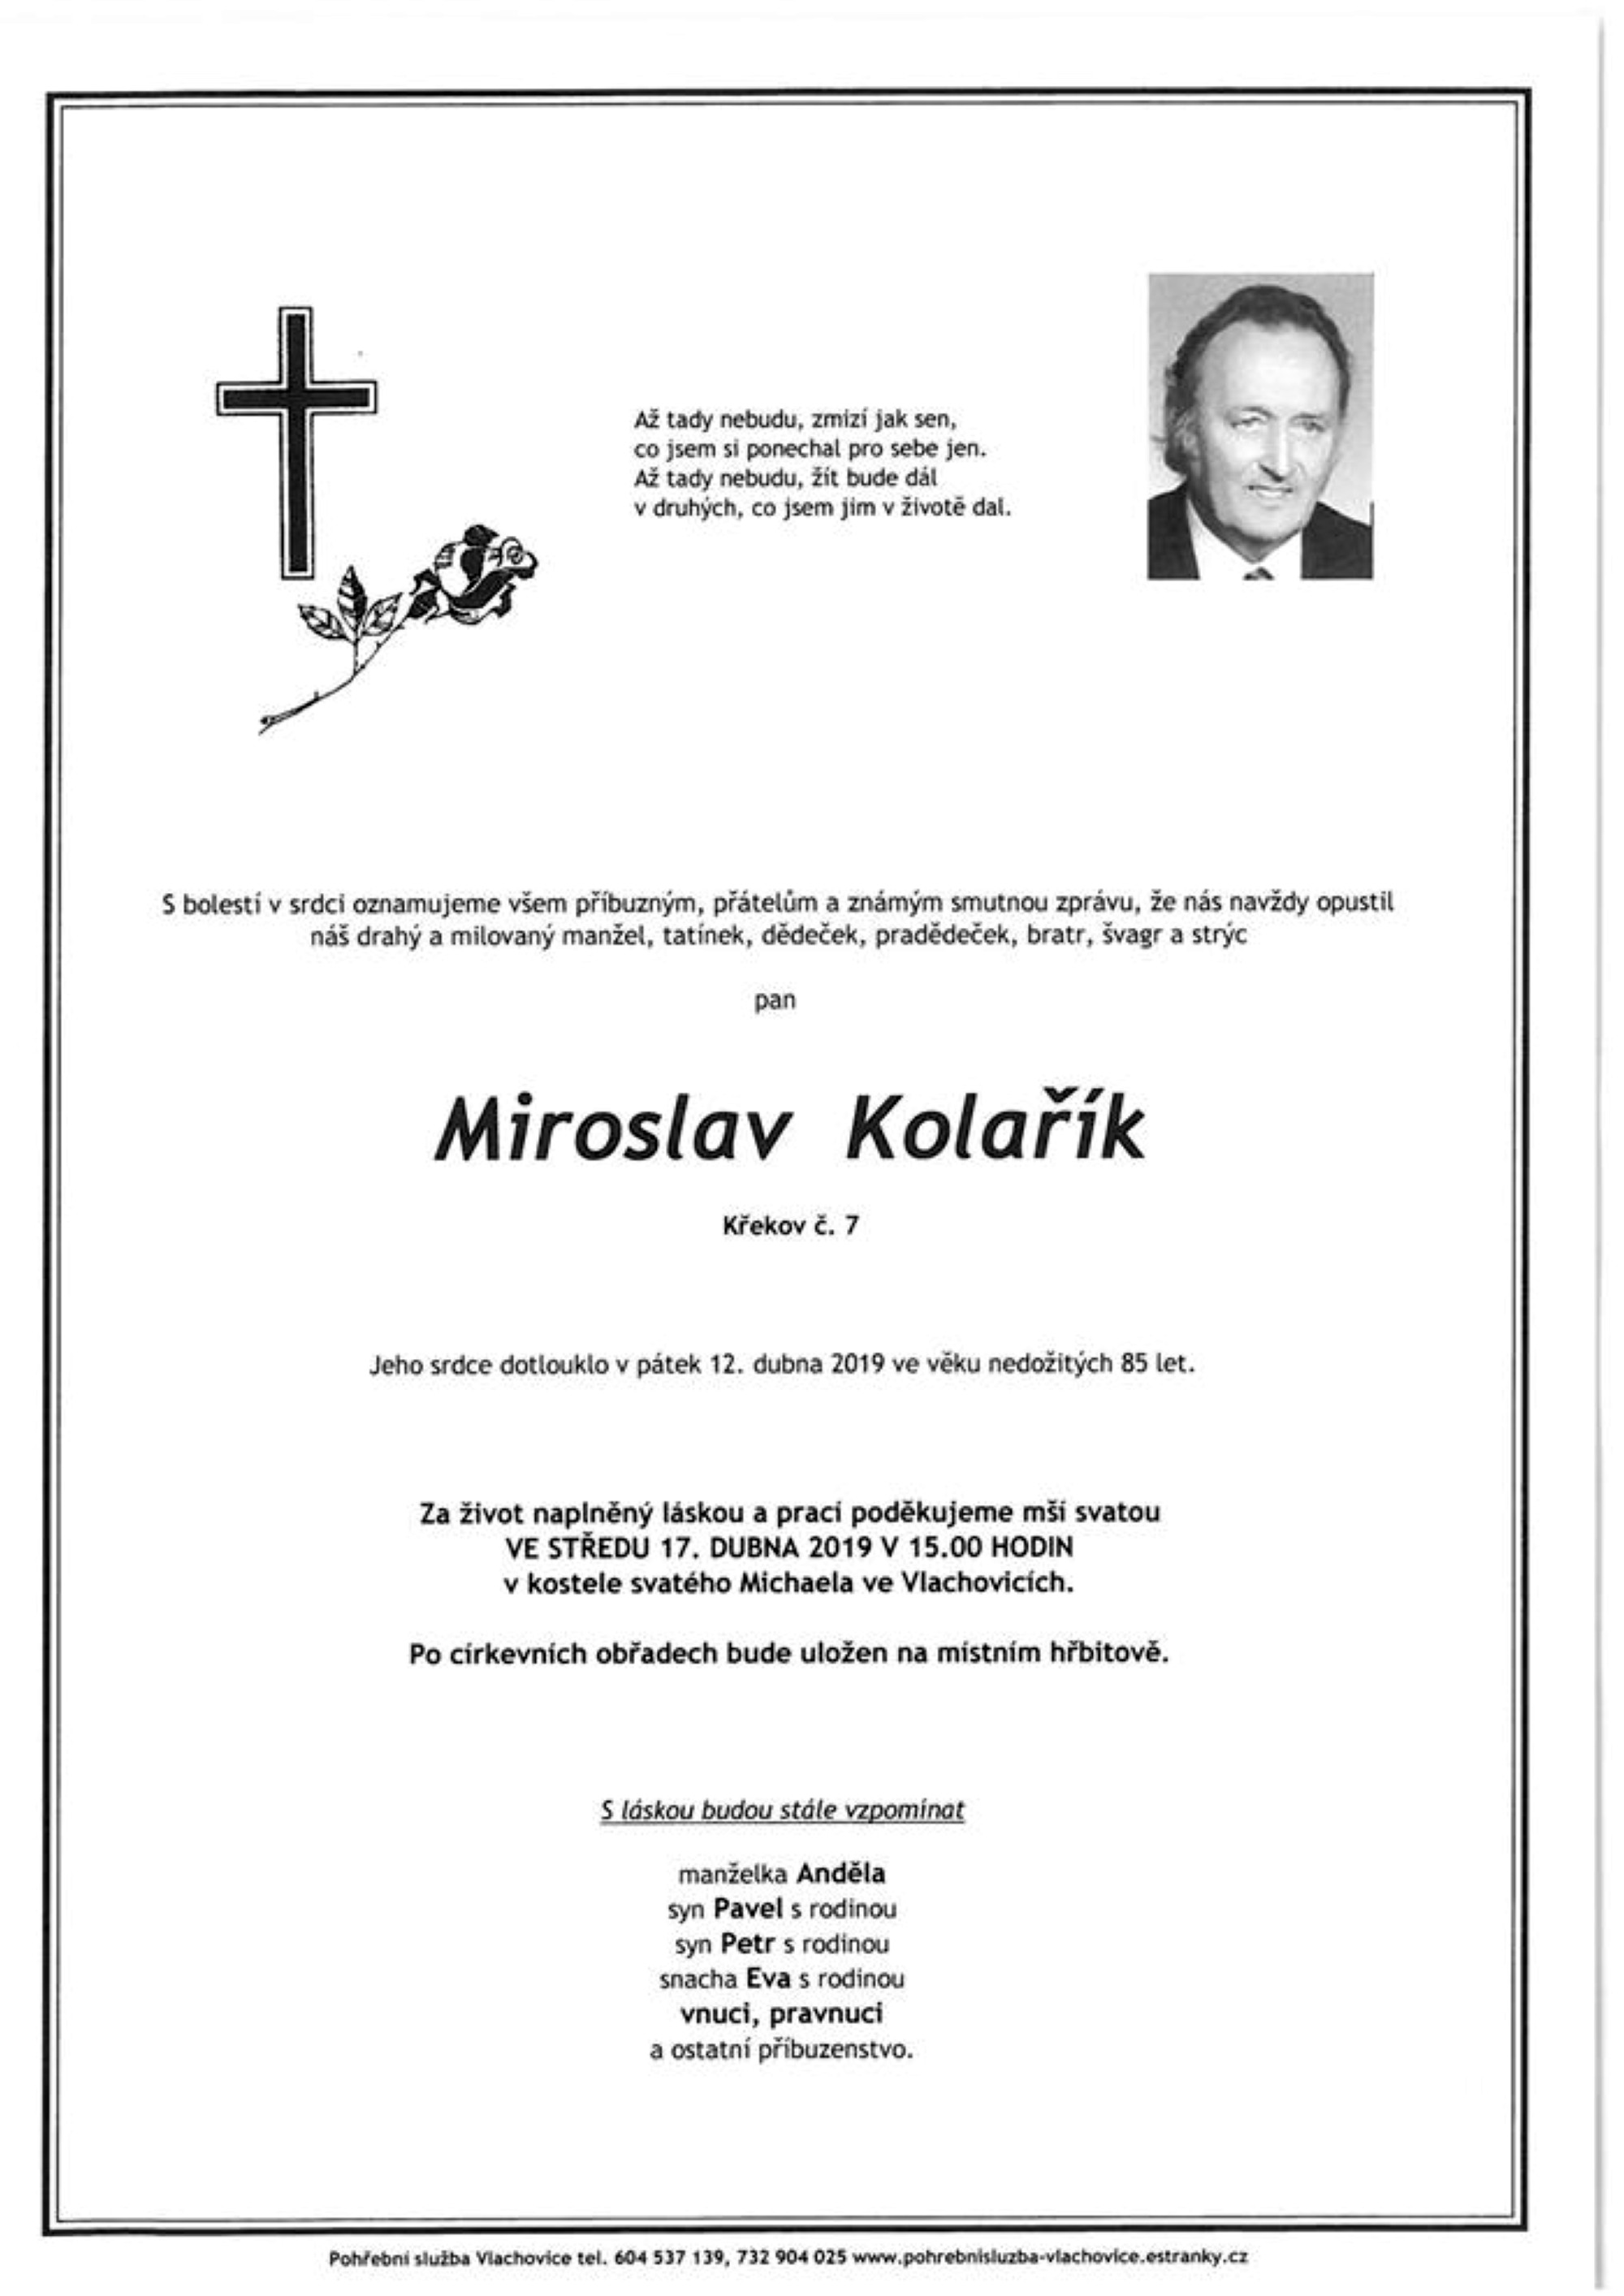 Miroslav Kolařík